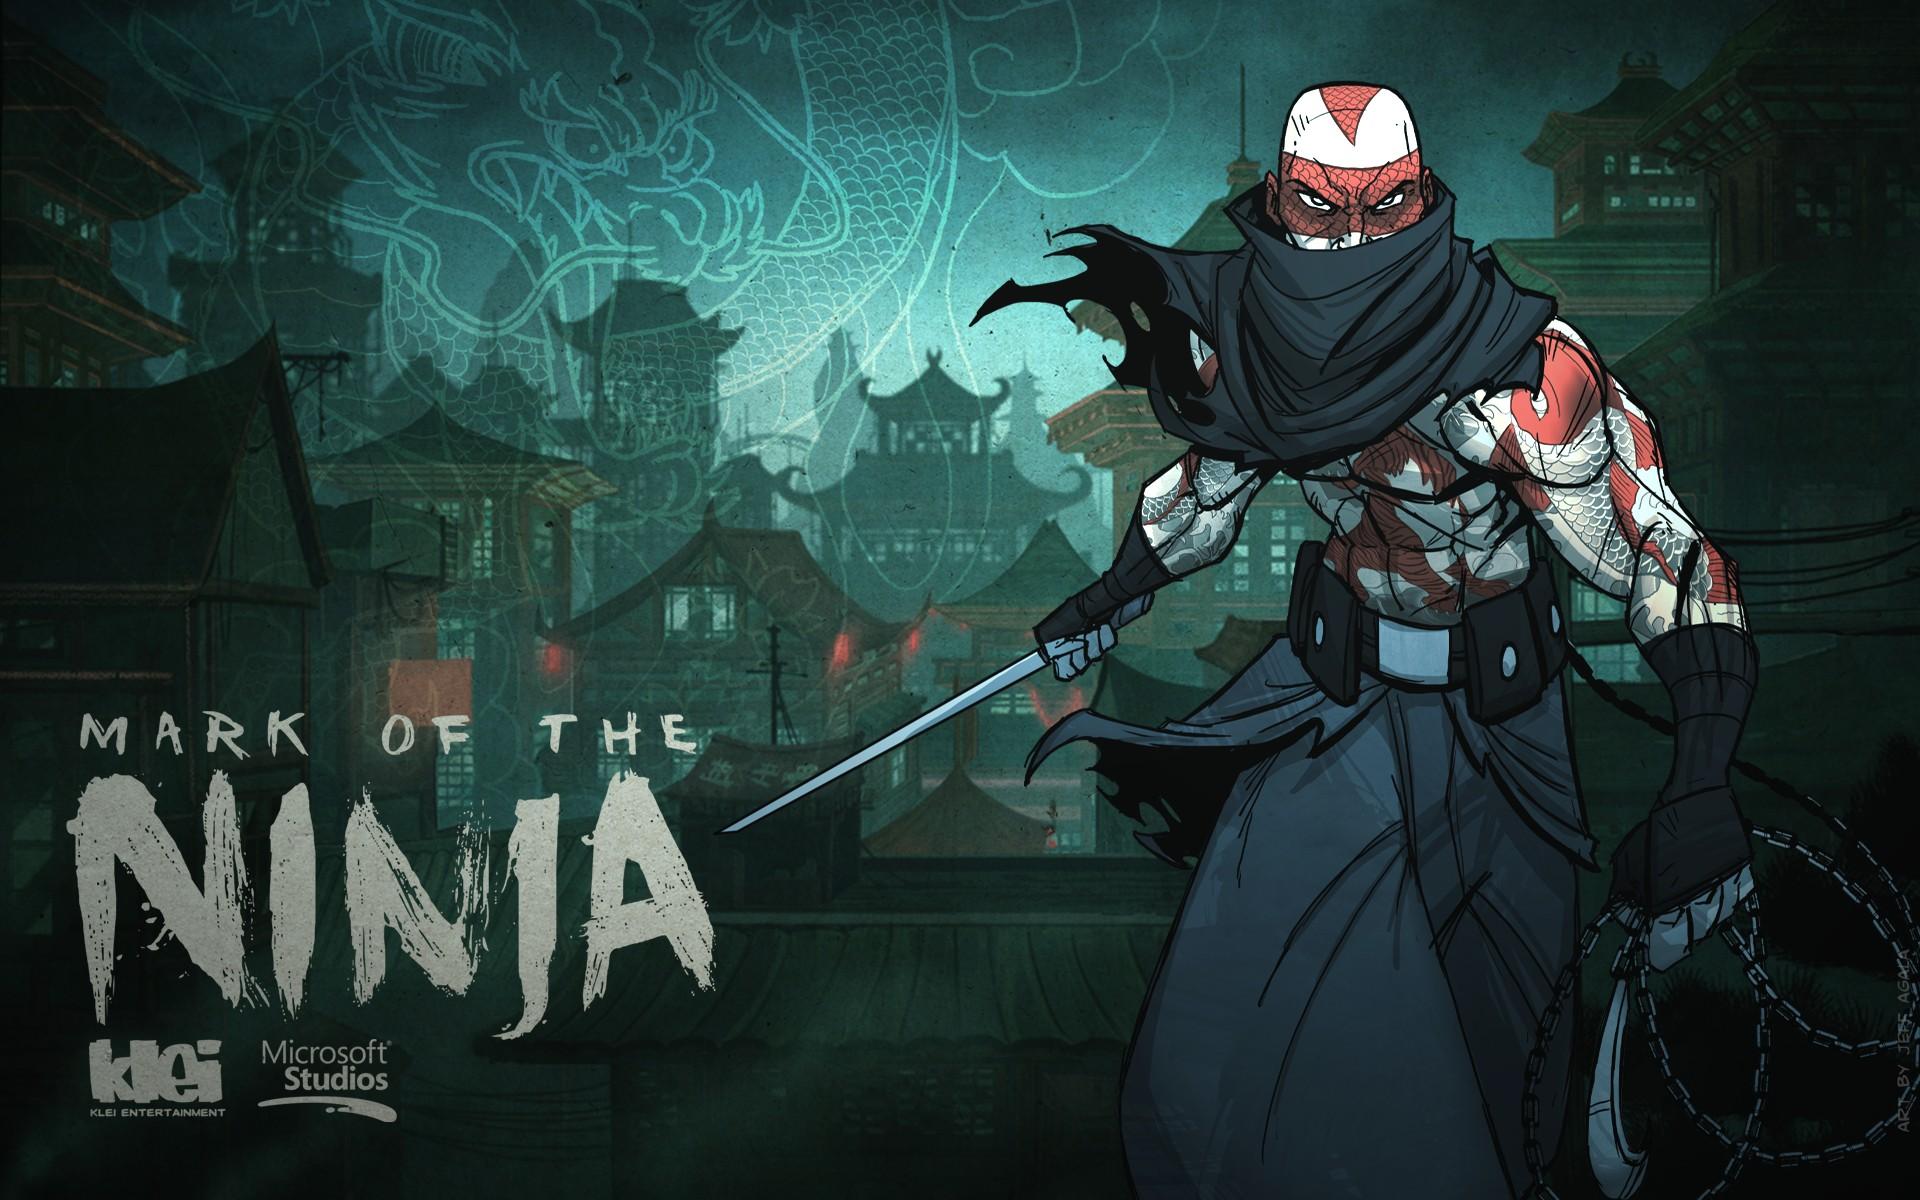 Ninjas Background